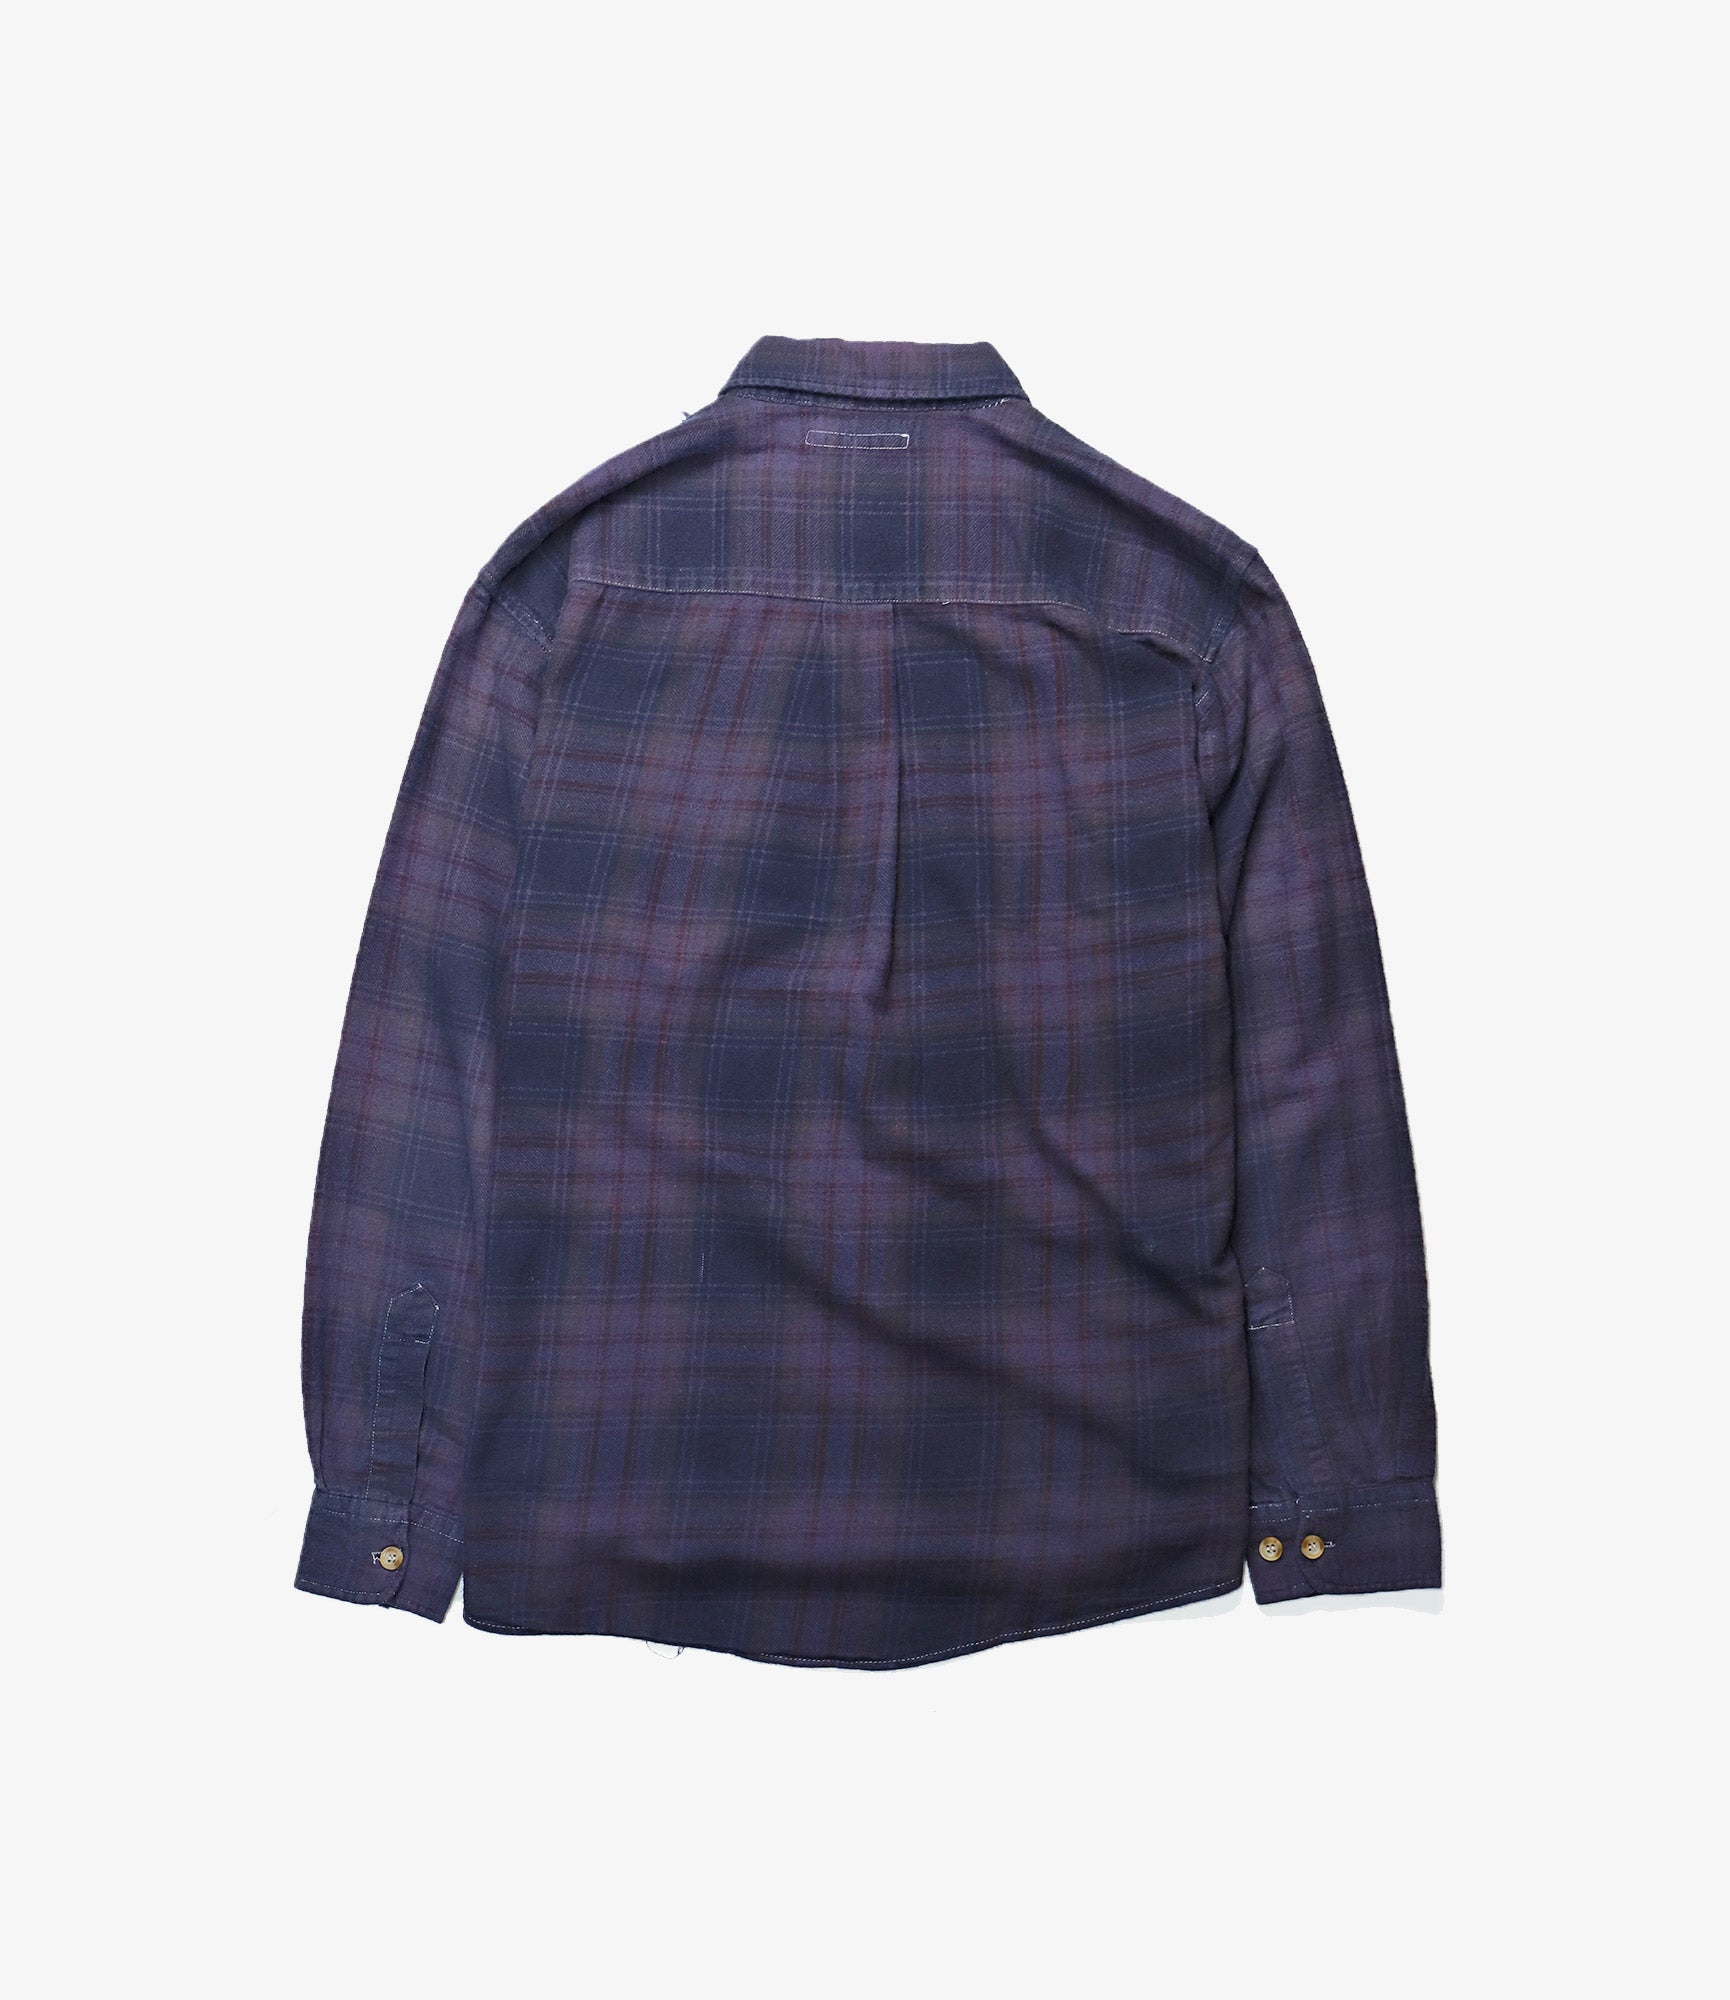 Rebuild by Needles Flannel Shirt - Ribbon Shirt / Over Dye - Purple